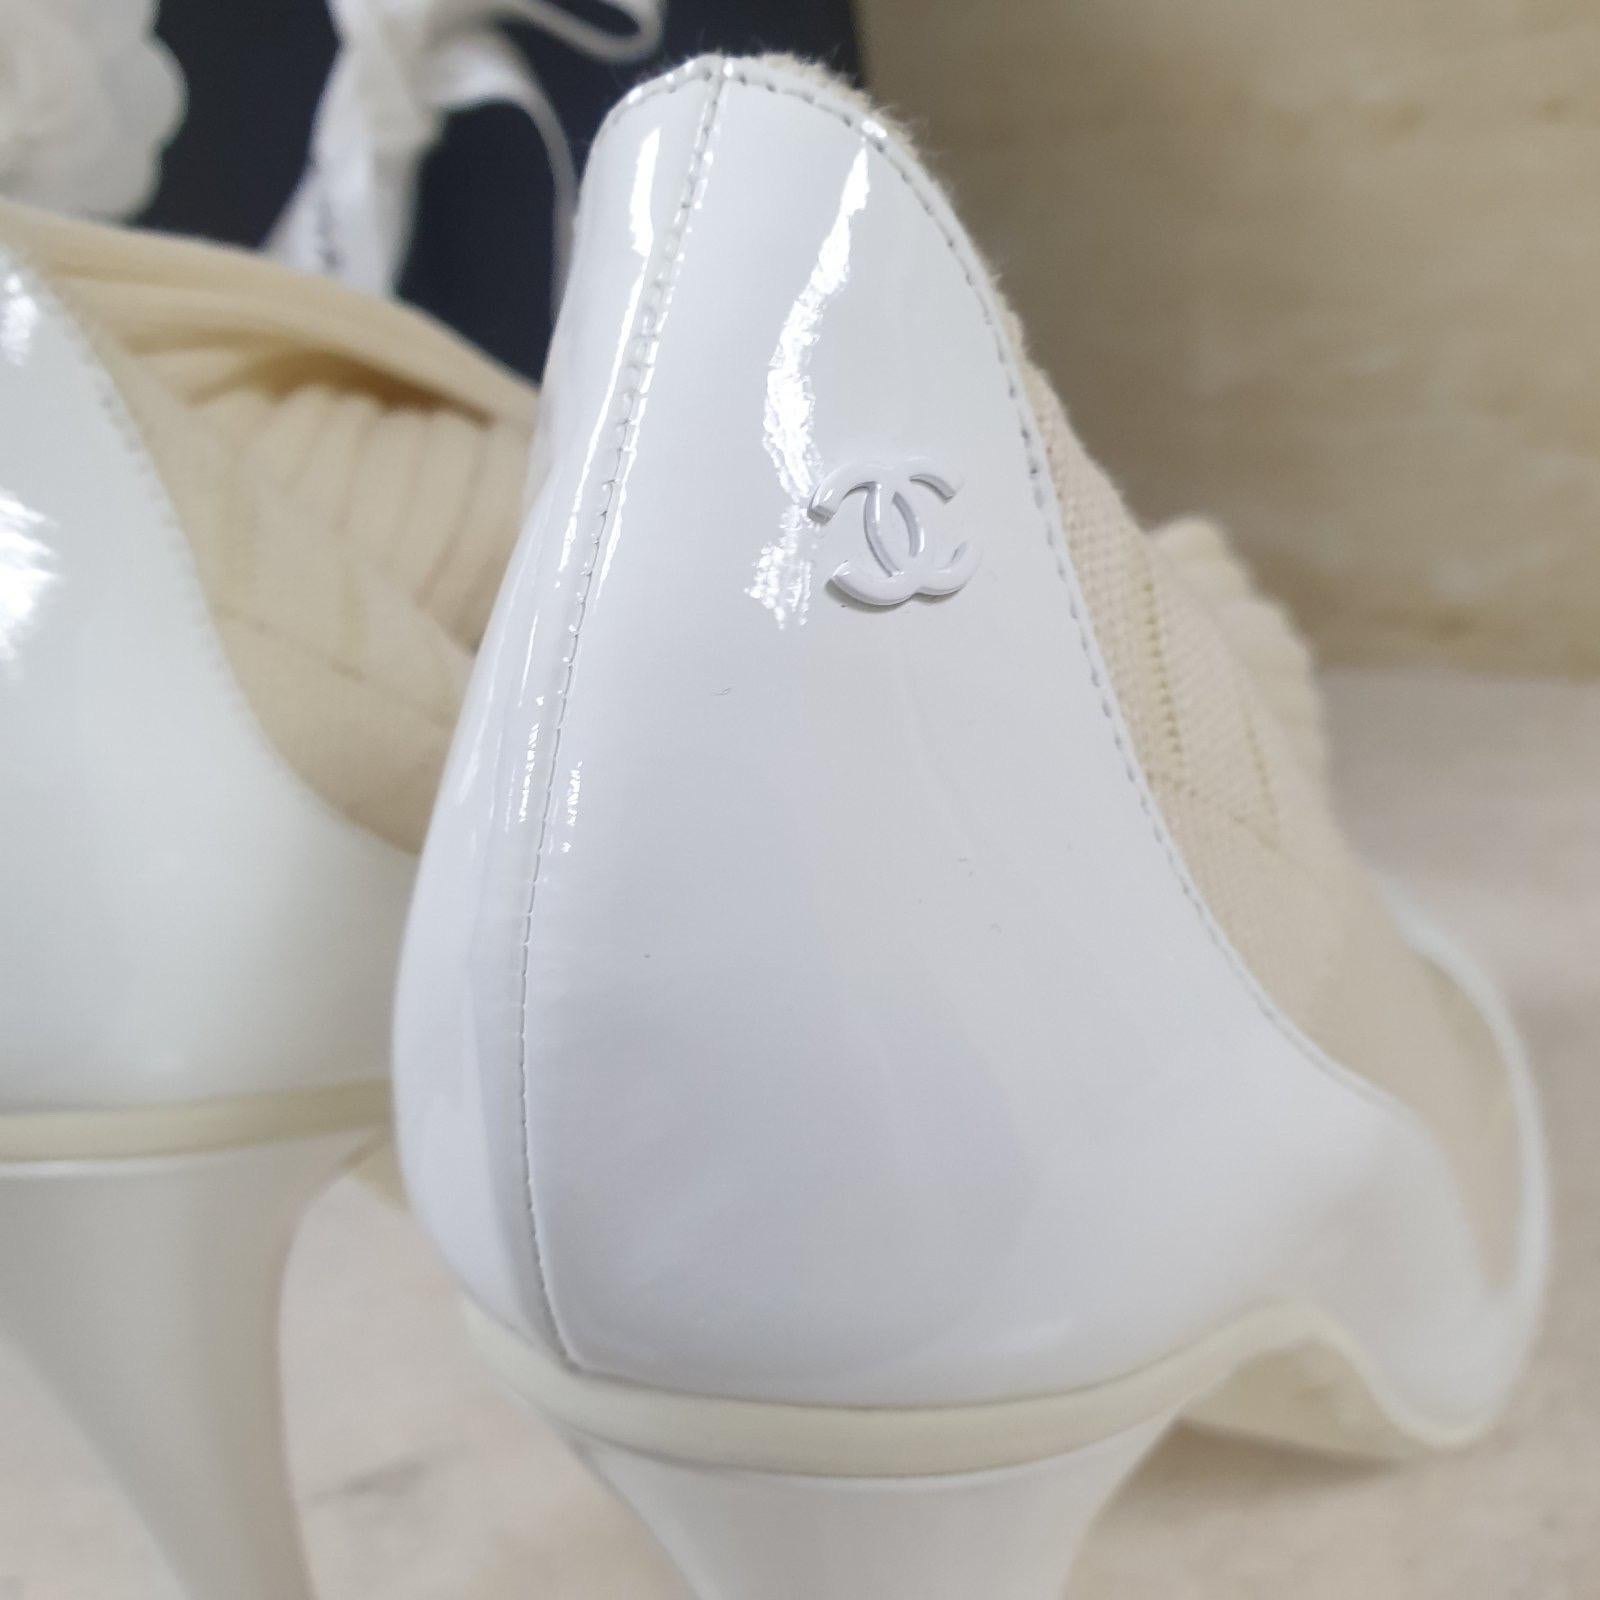 CHANEL Paris Dubai White Patent Leather Knitted Pumps Heels 5